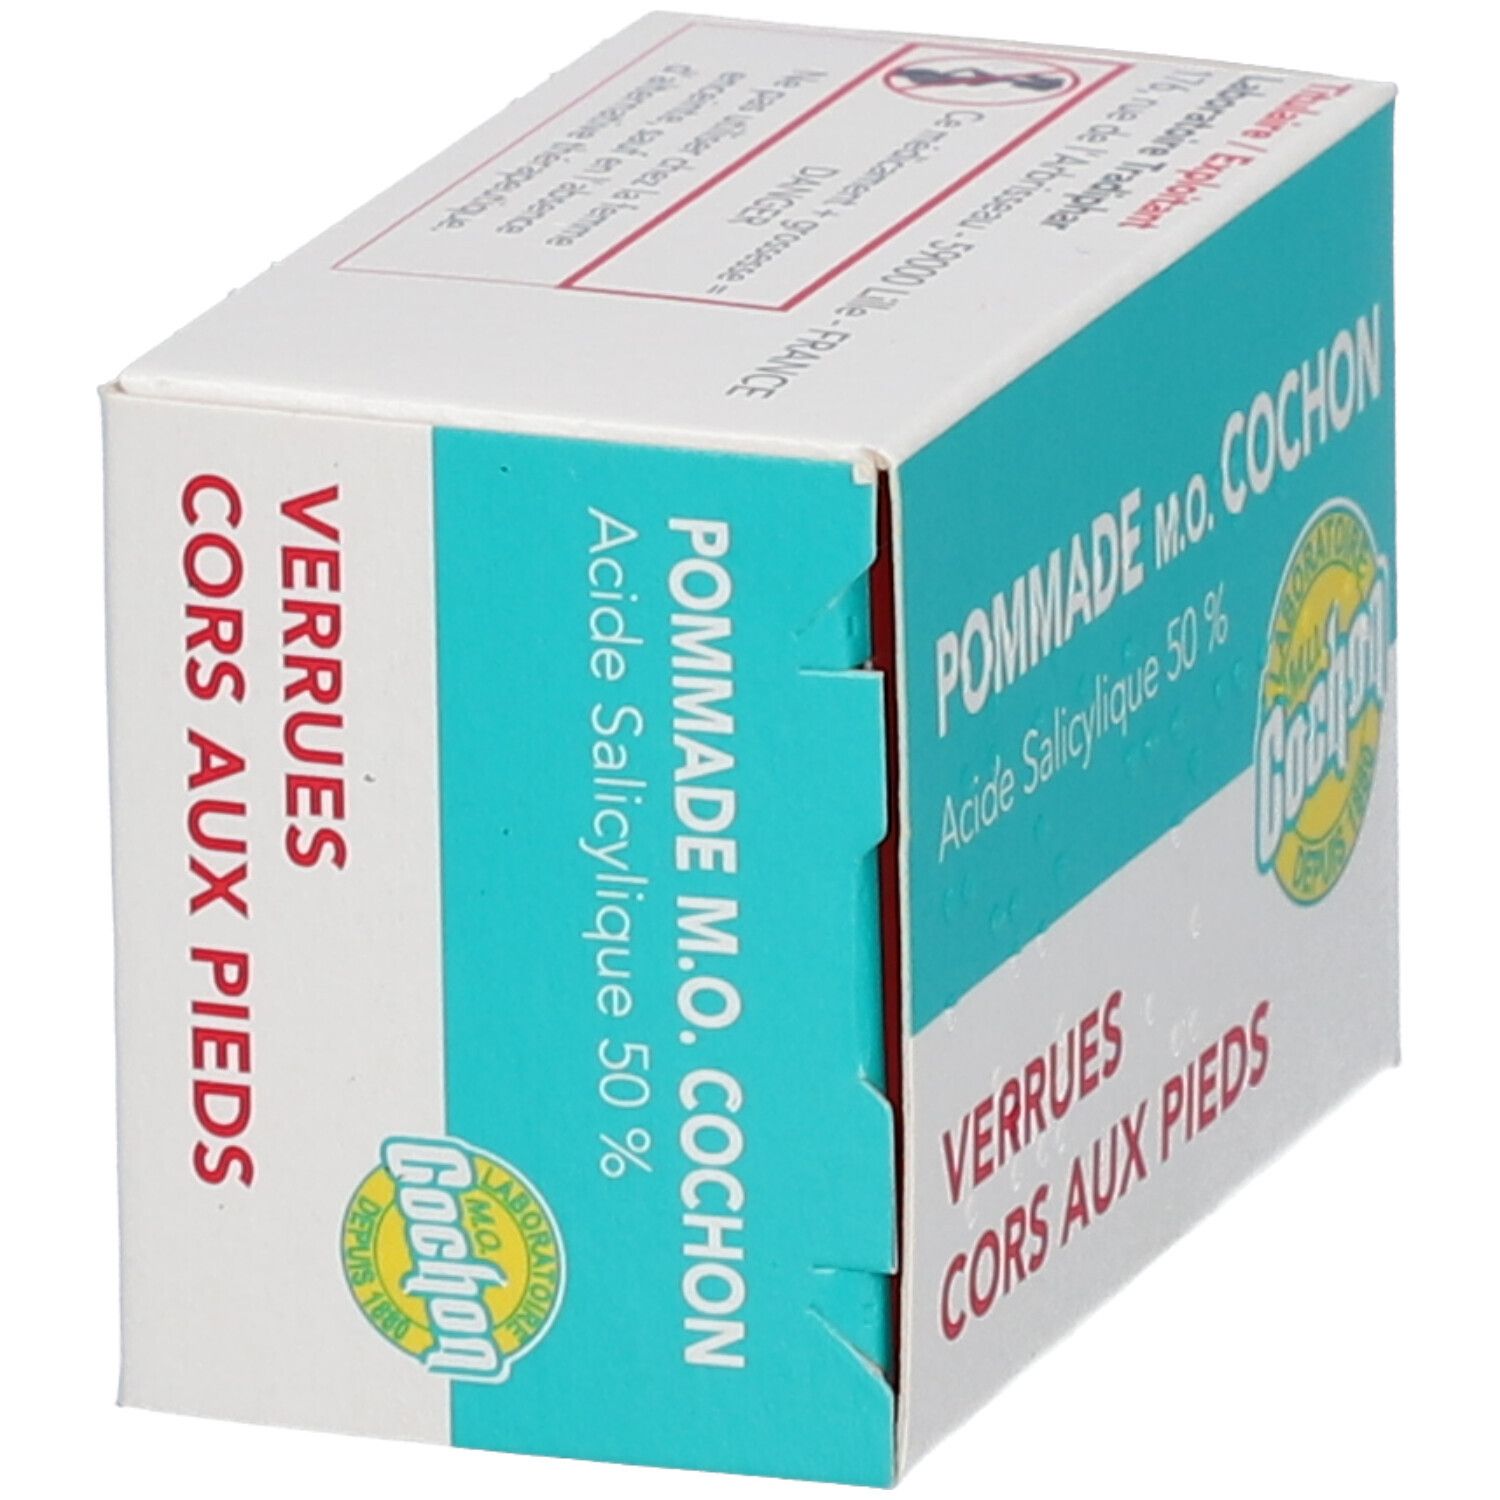 Tradiphar Pommade M.O. Cochon 10 g - Redcare Pharmacie